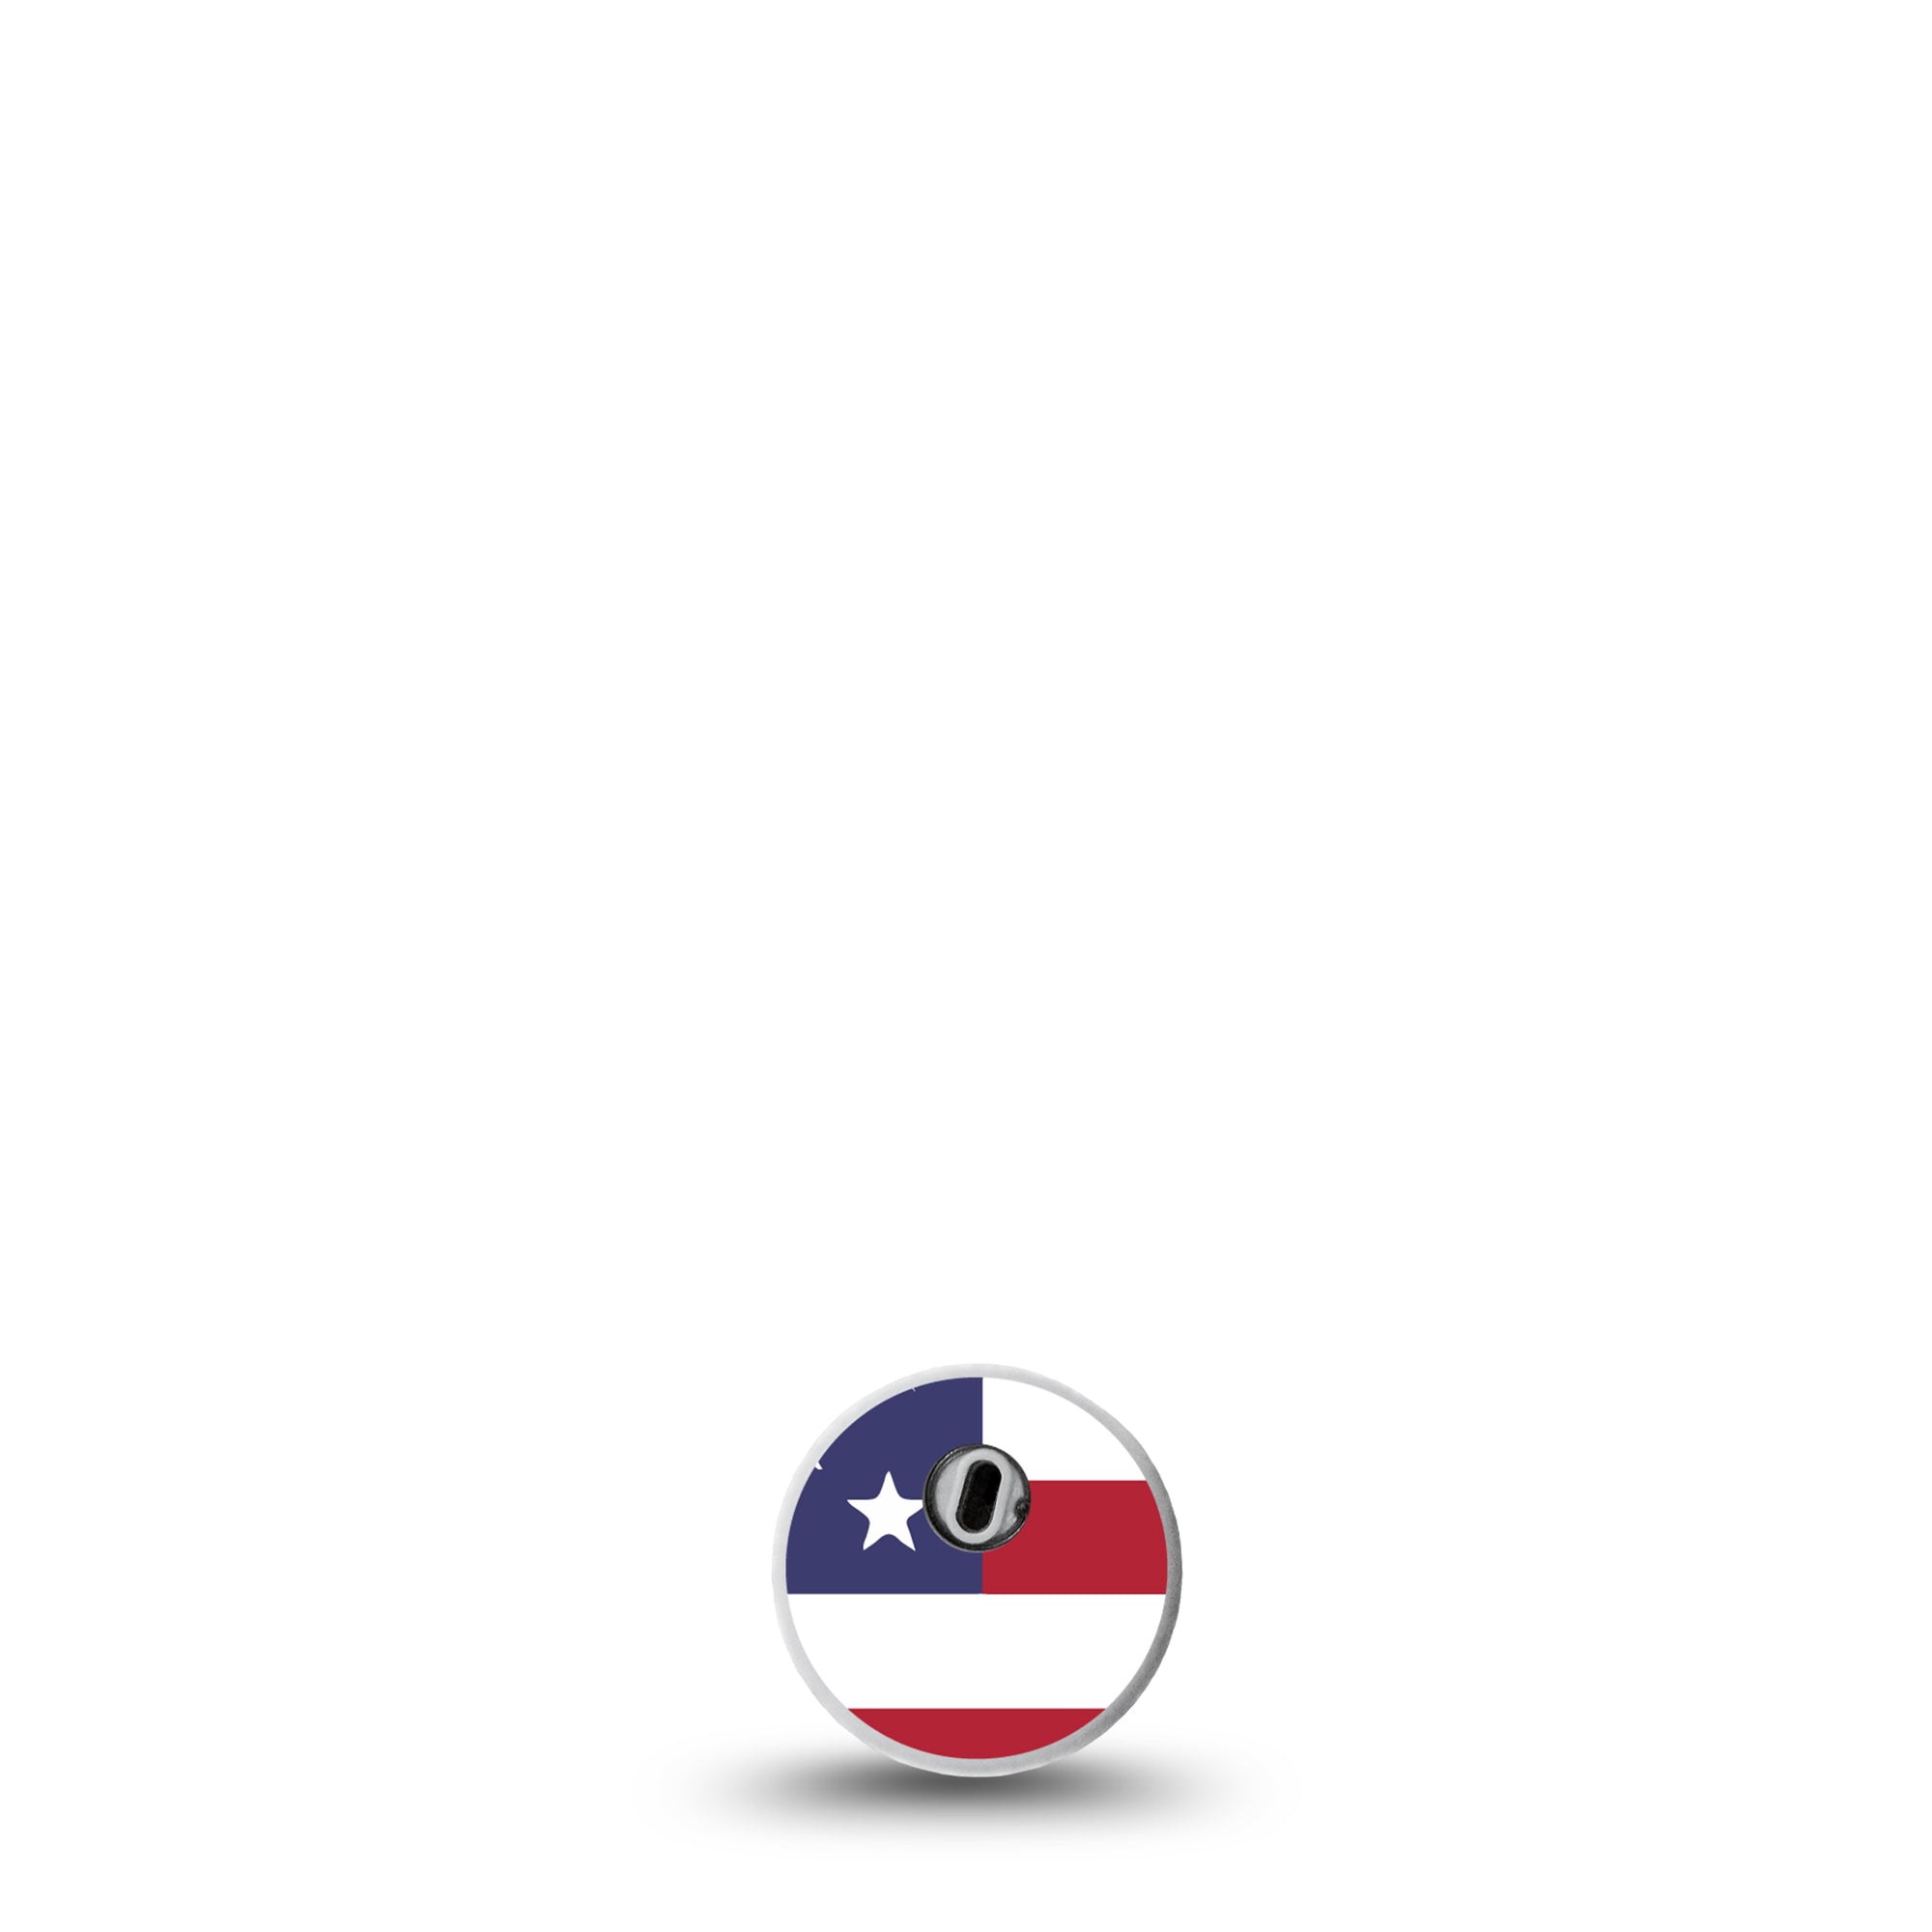 U.S. Flag Libre 3 Transmitter Sticker, Single, Country Flag Inspired, Adhesive Sticker Design